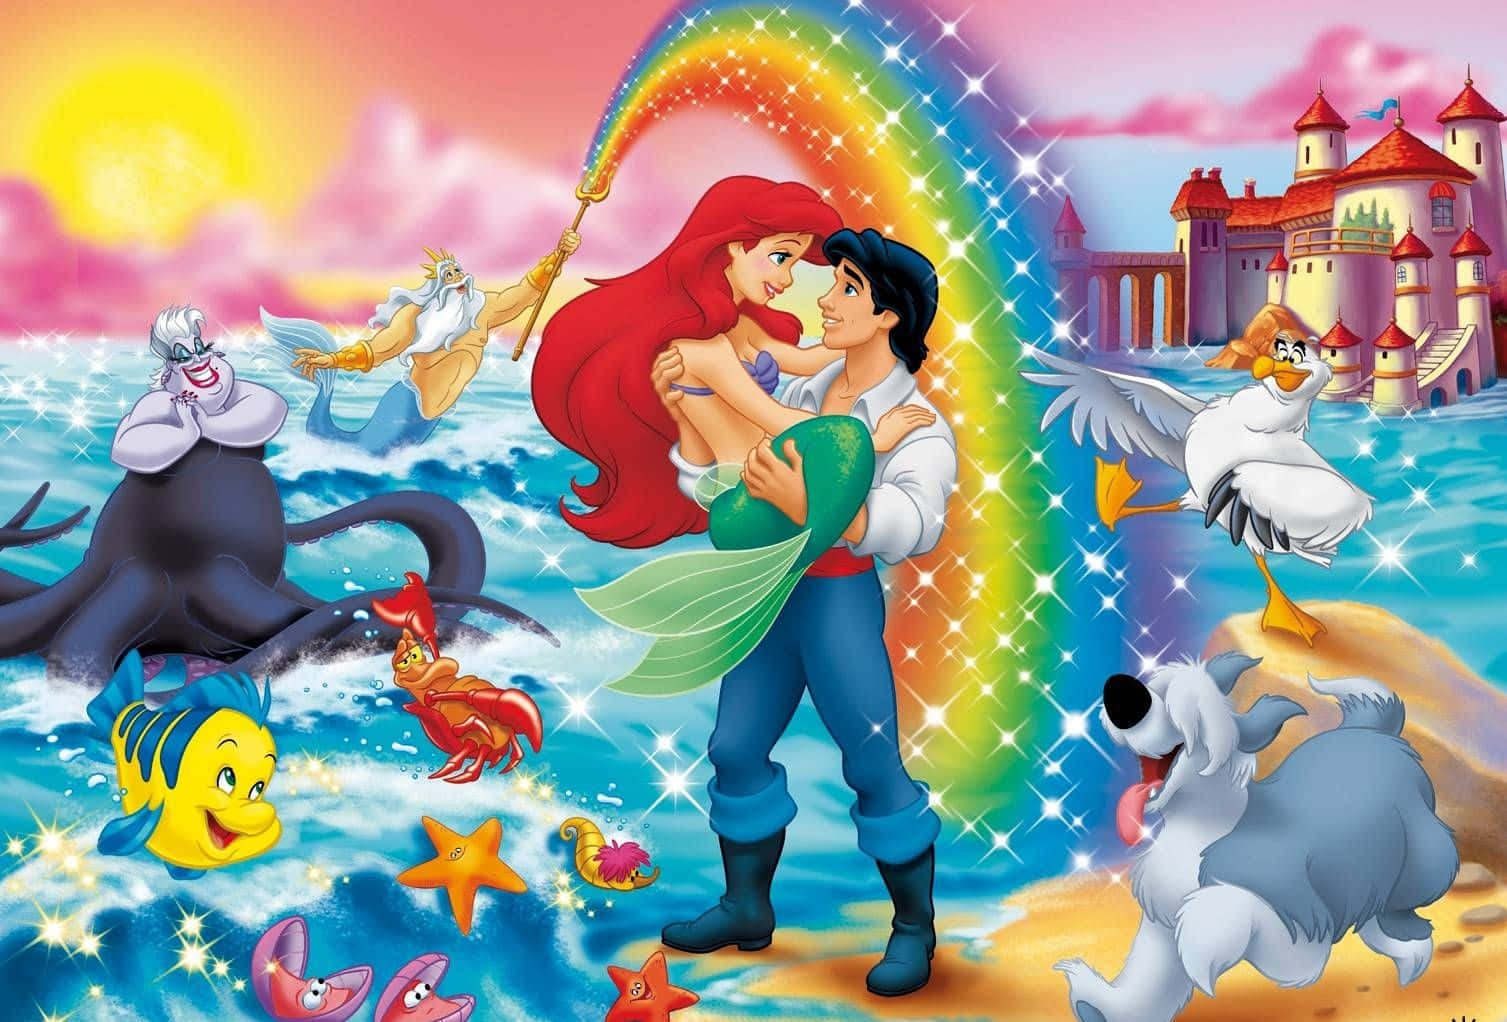 Ariel from Disney's The Little Mermaid bringing joy and adventure Wallpaper